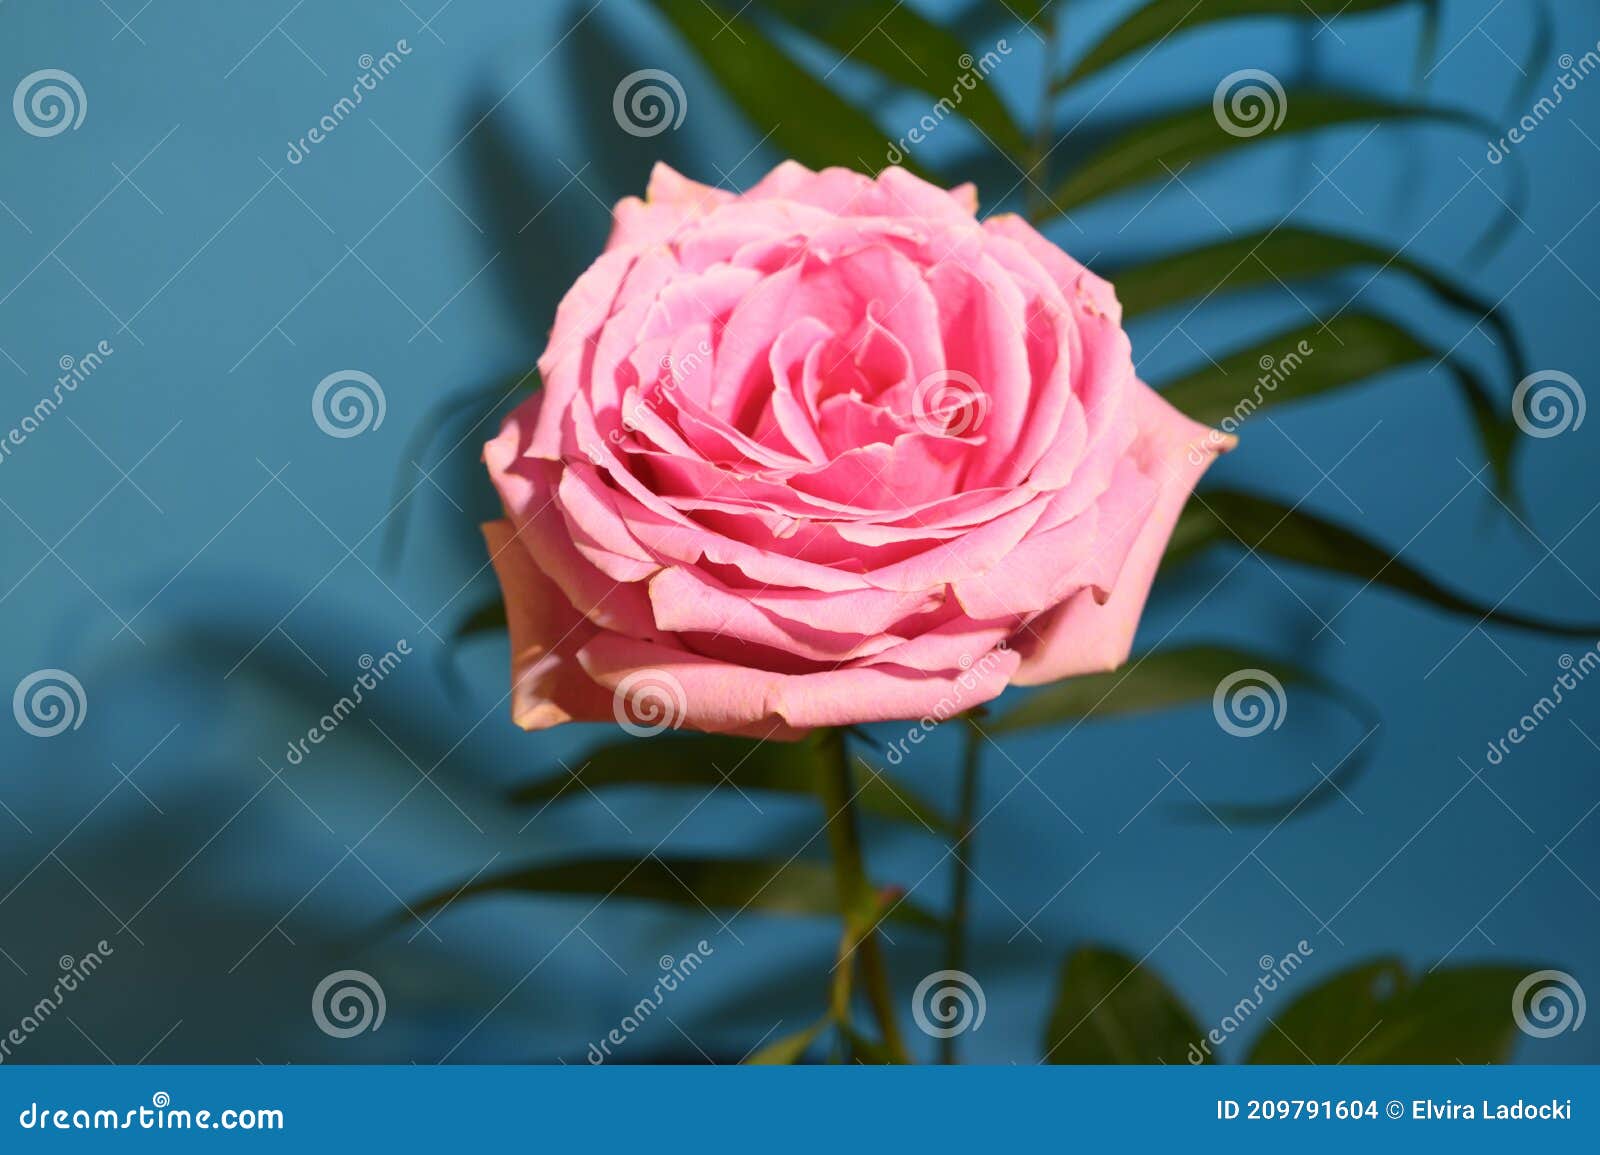 La Flor Rosa Rosa Rosa Rosa Rosa, Colorida Y Agradable, Cerca De La Hoja De  Palma Foto de archivo - Imagen de agradable, primero: 209791604